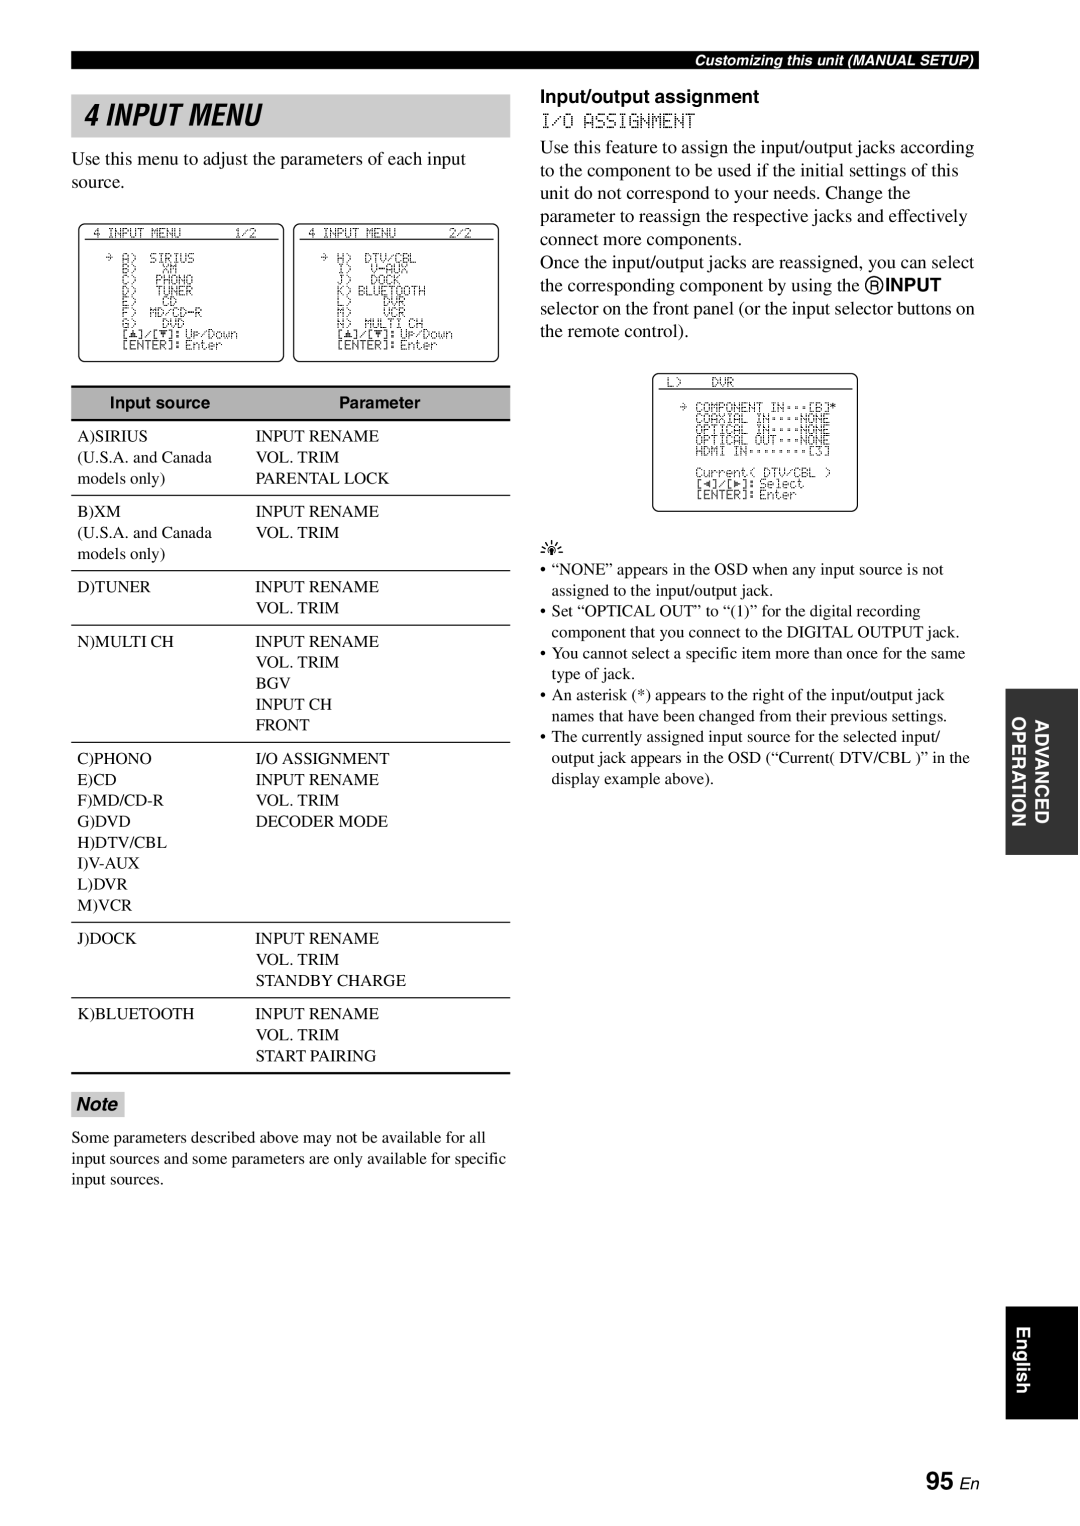 Yamaha HTR-6180 owner manual Input Menu, 95 En 